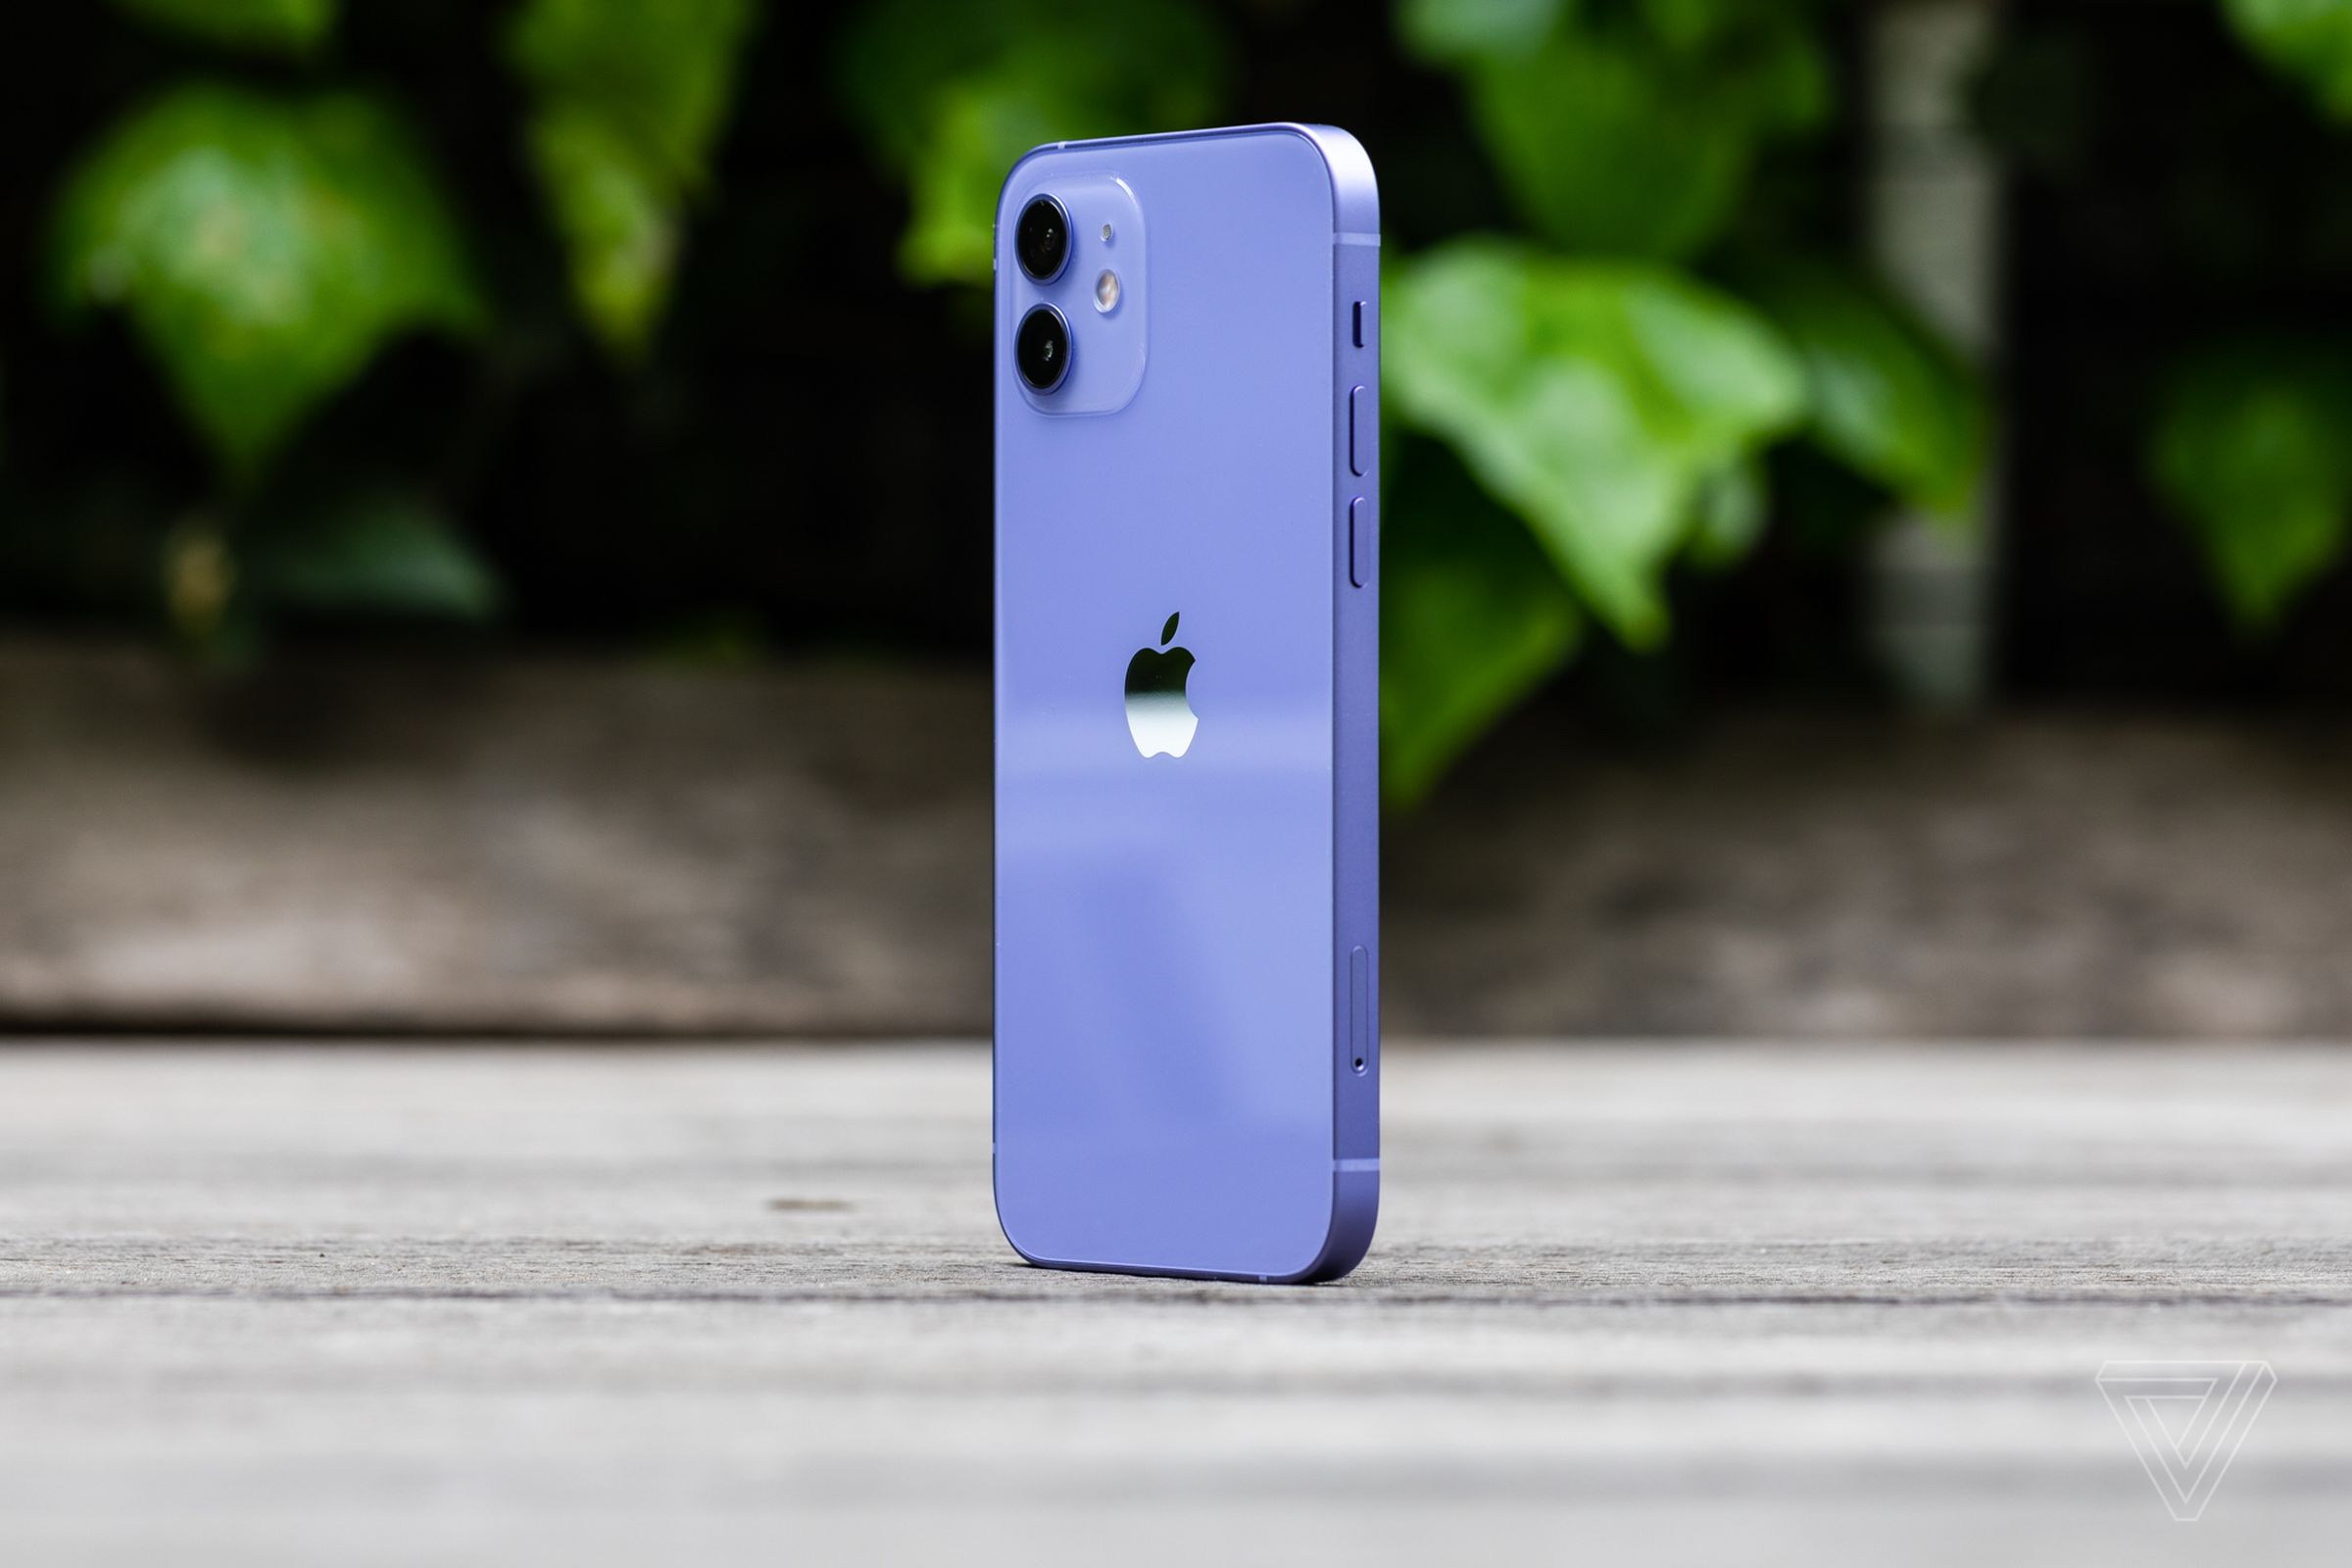 A purple iPhone 12